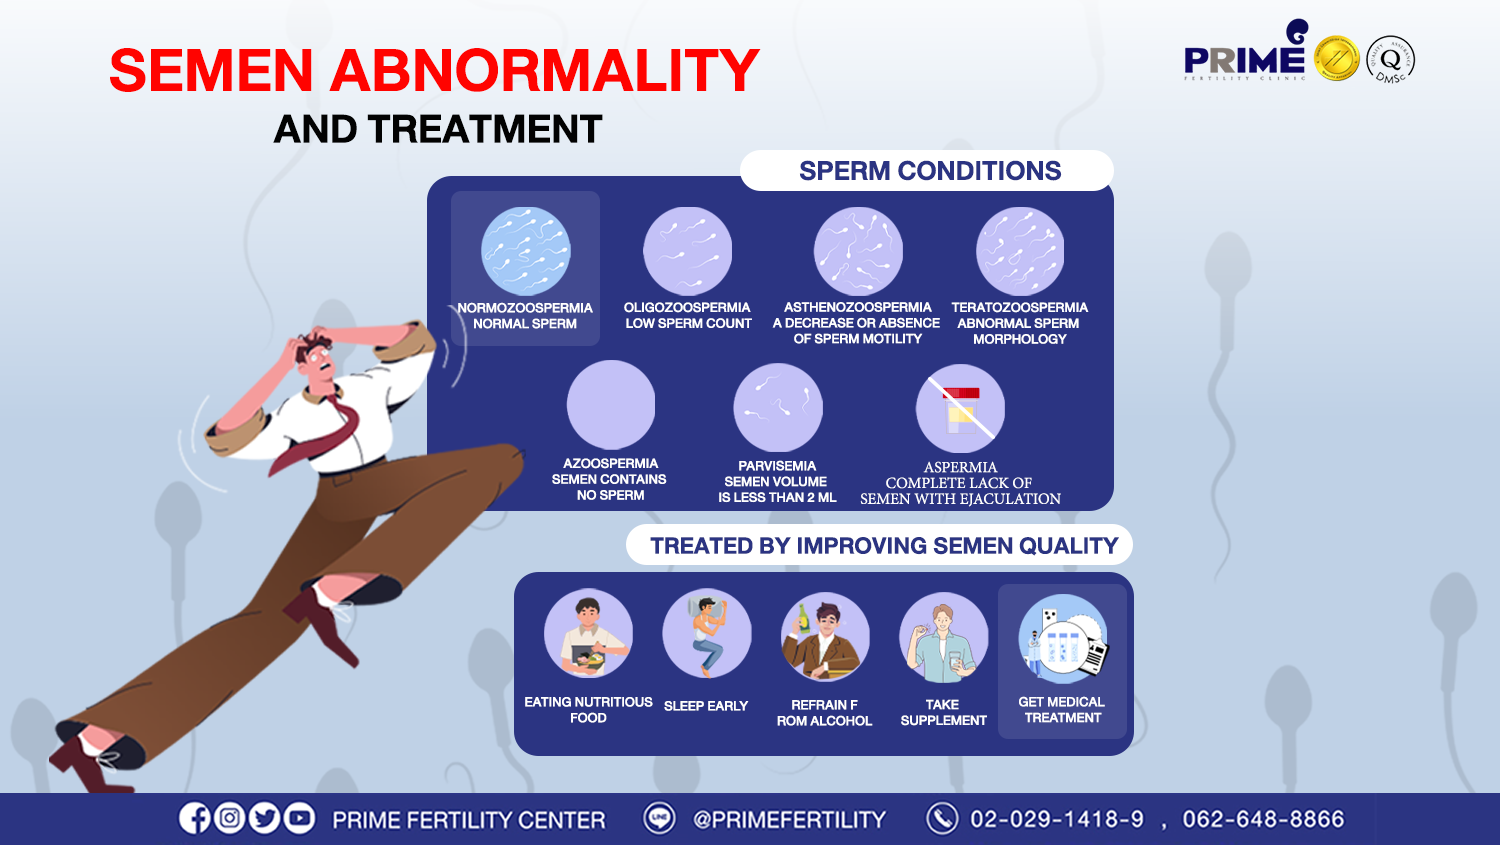 Semen abnormality and treatment